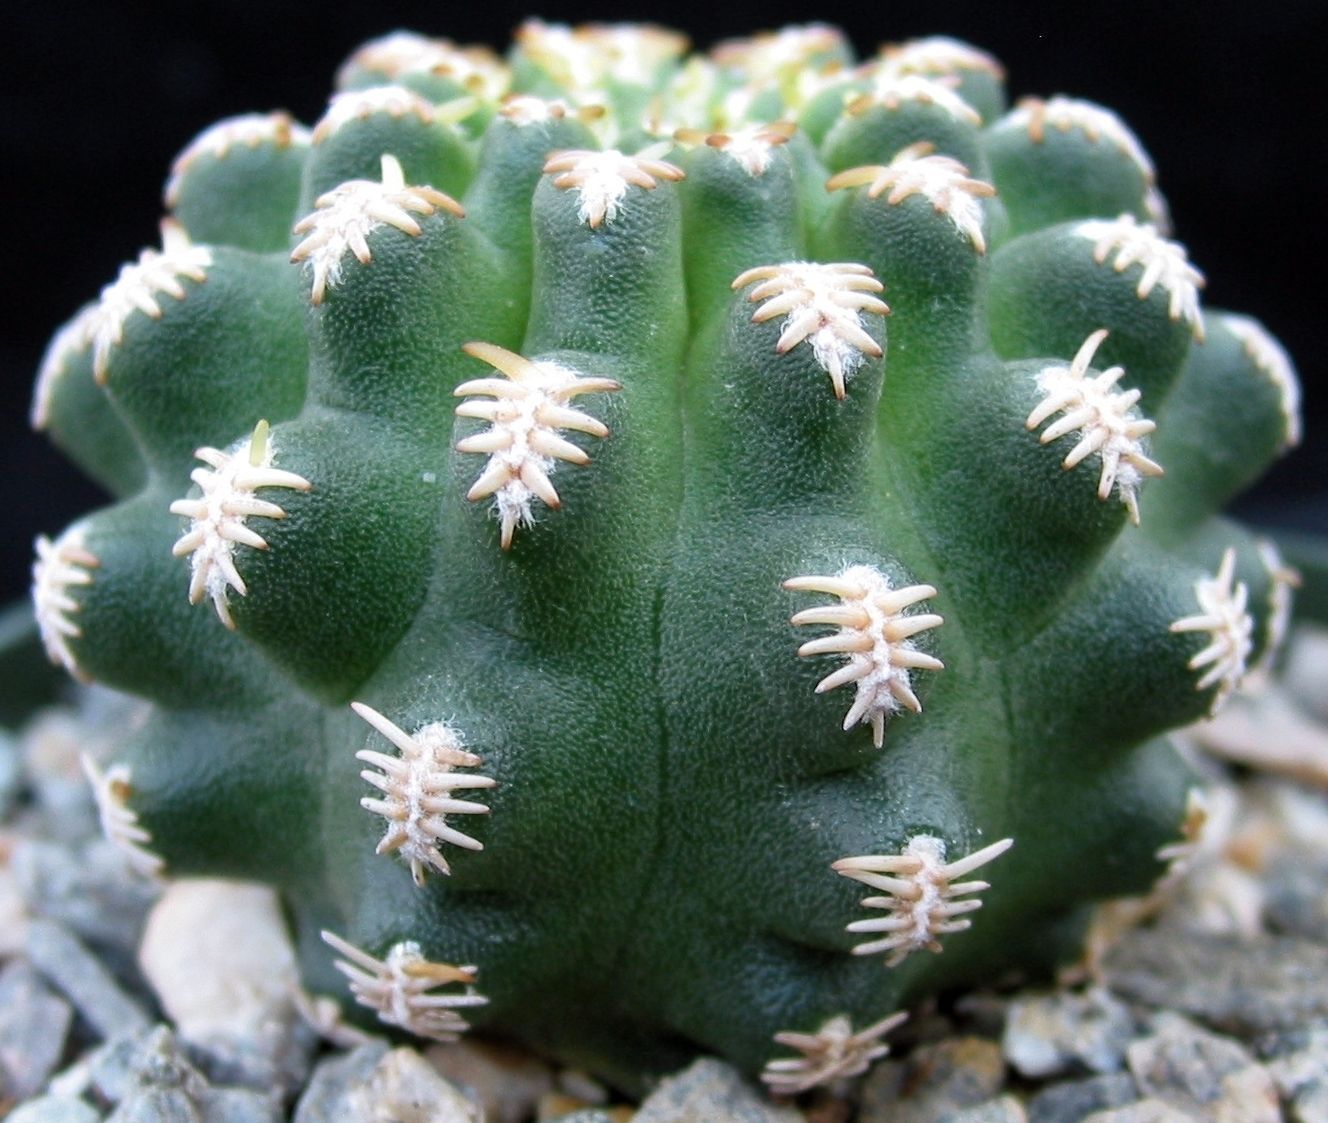 cactus like plants